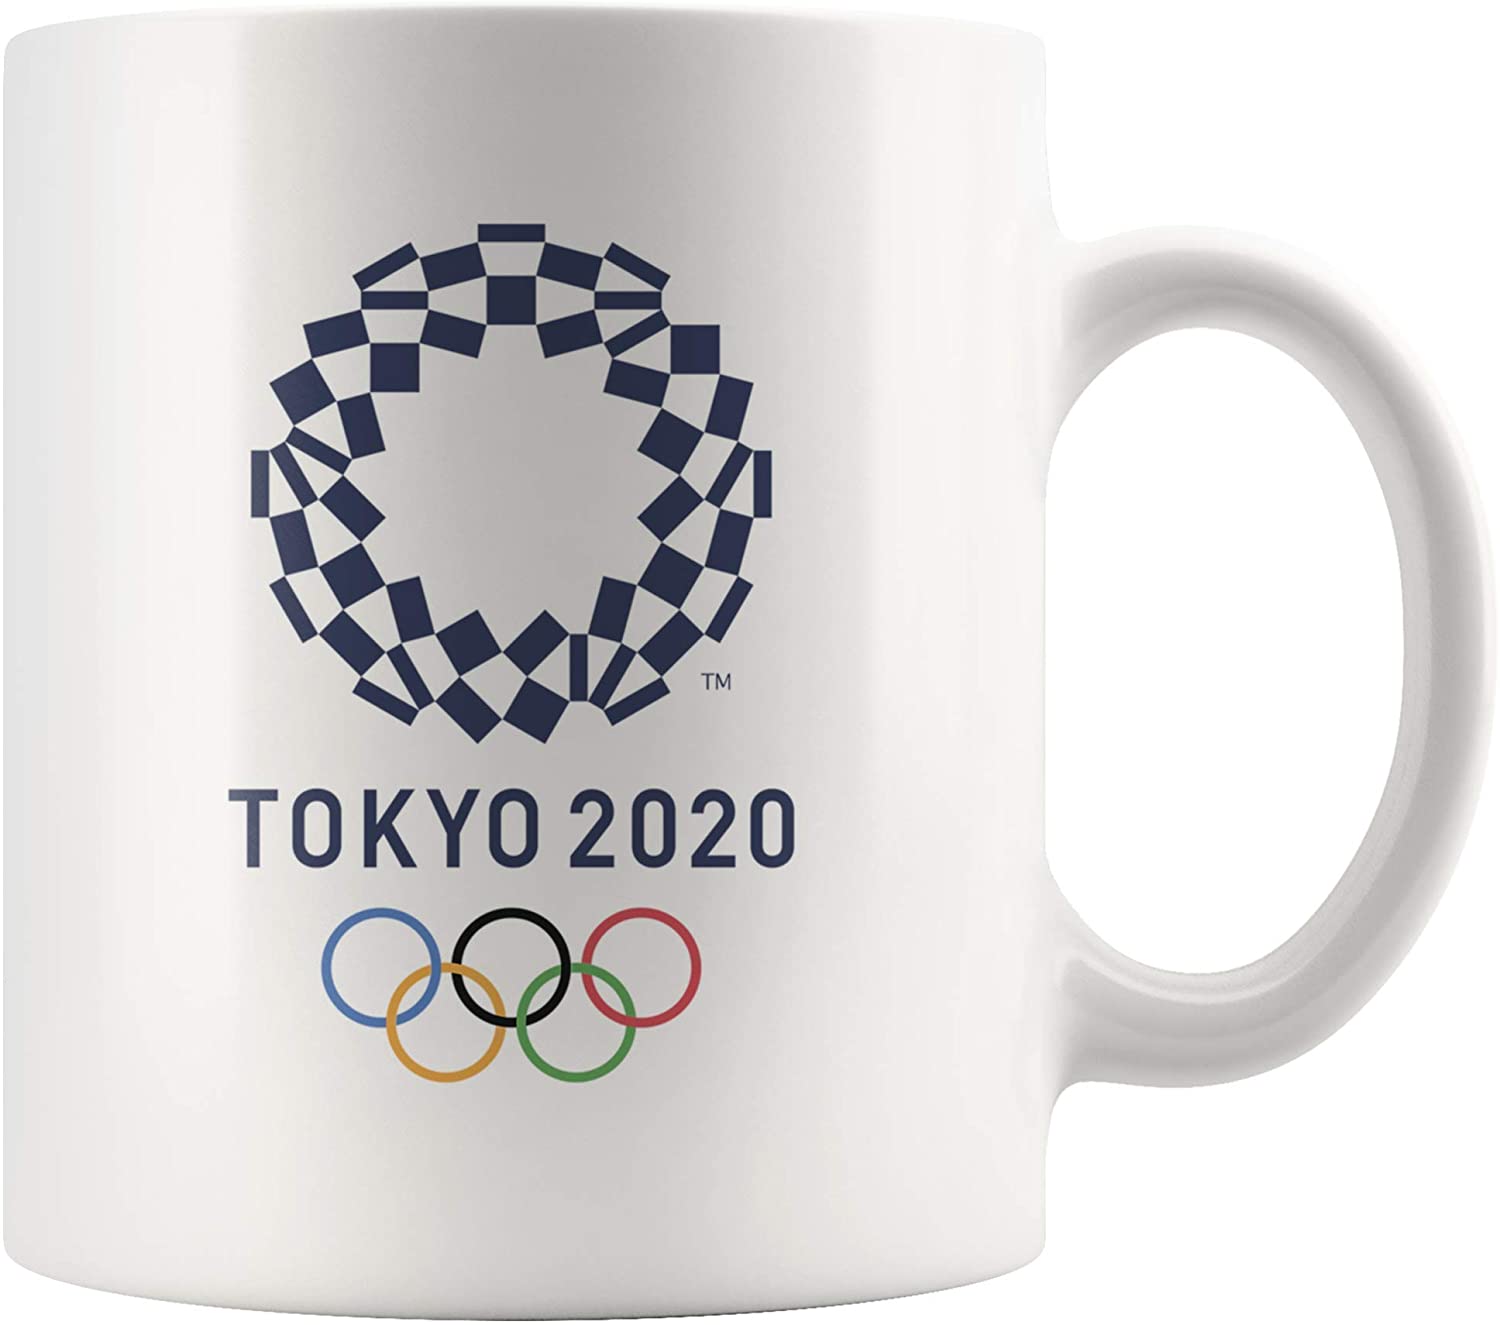 proposte a tema Tokyo 2020 - tazza